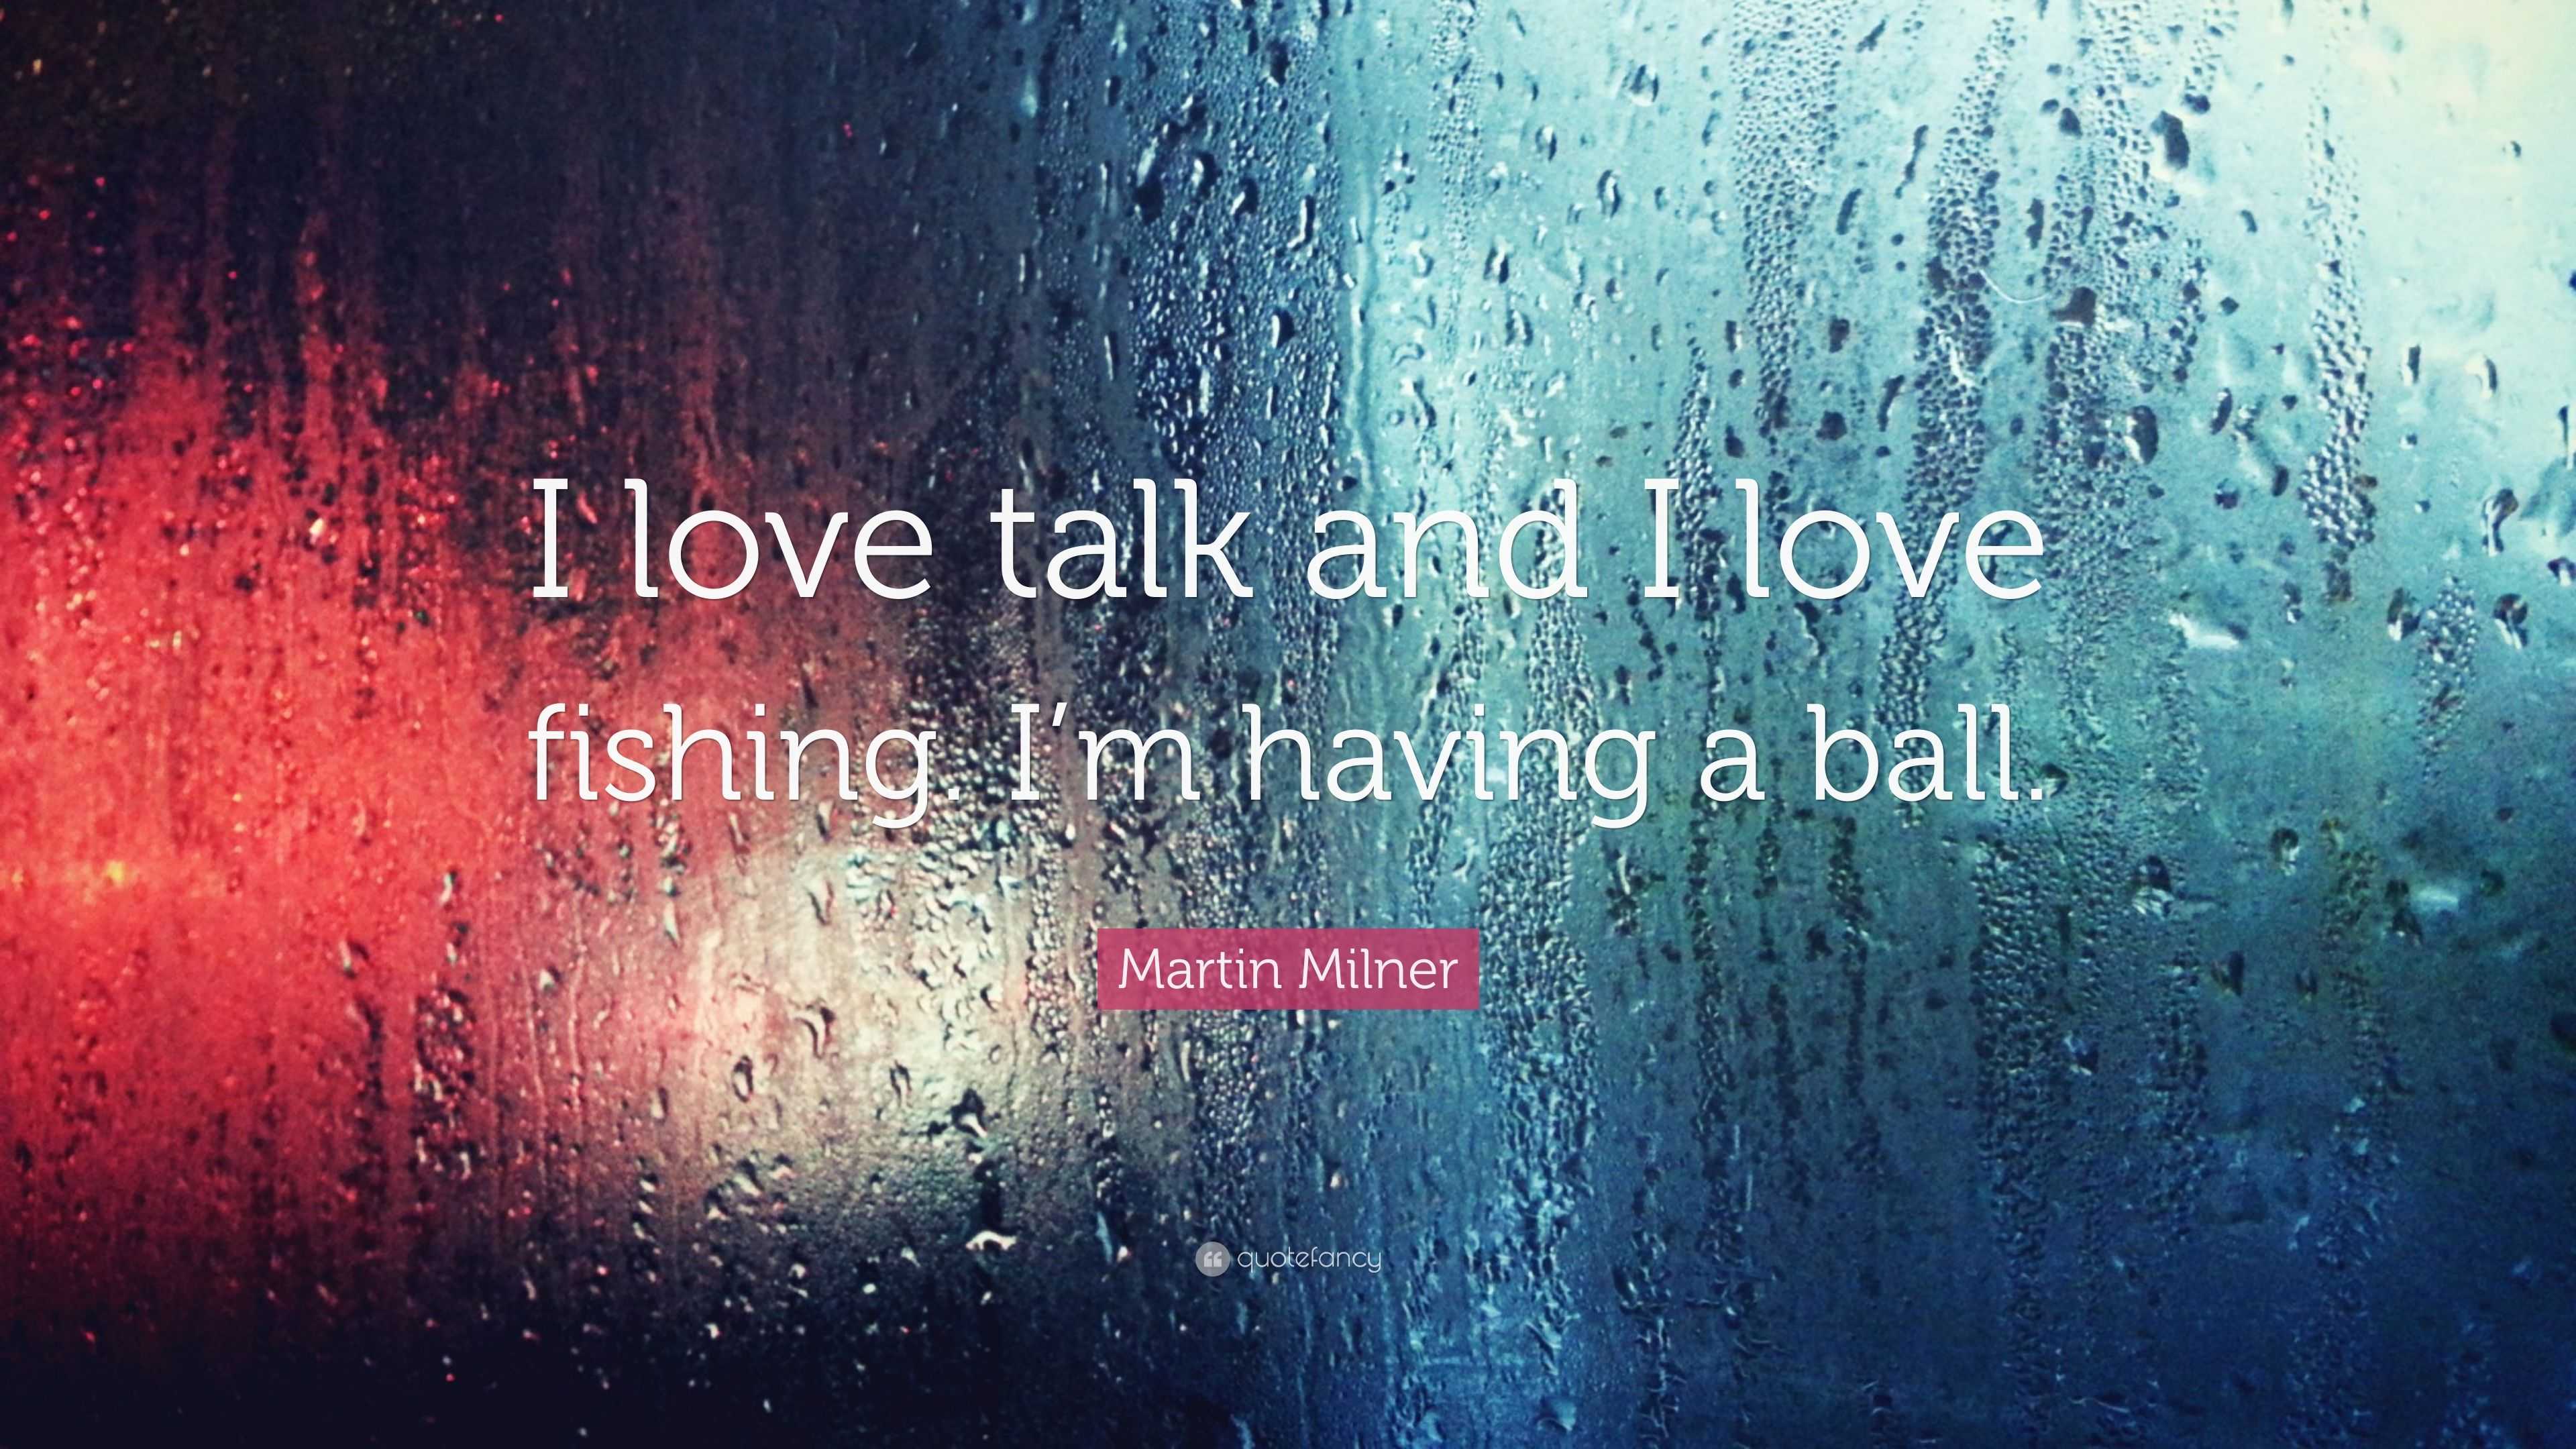 Martin Milner Quote: “I love talk and I love fishing. I'm having a ball.”